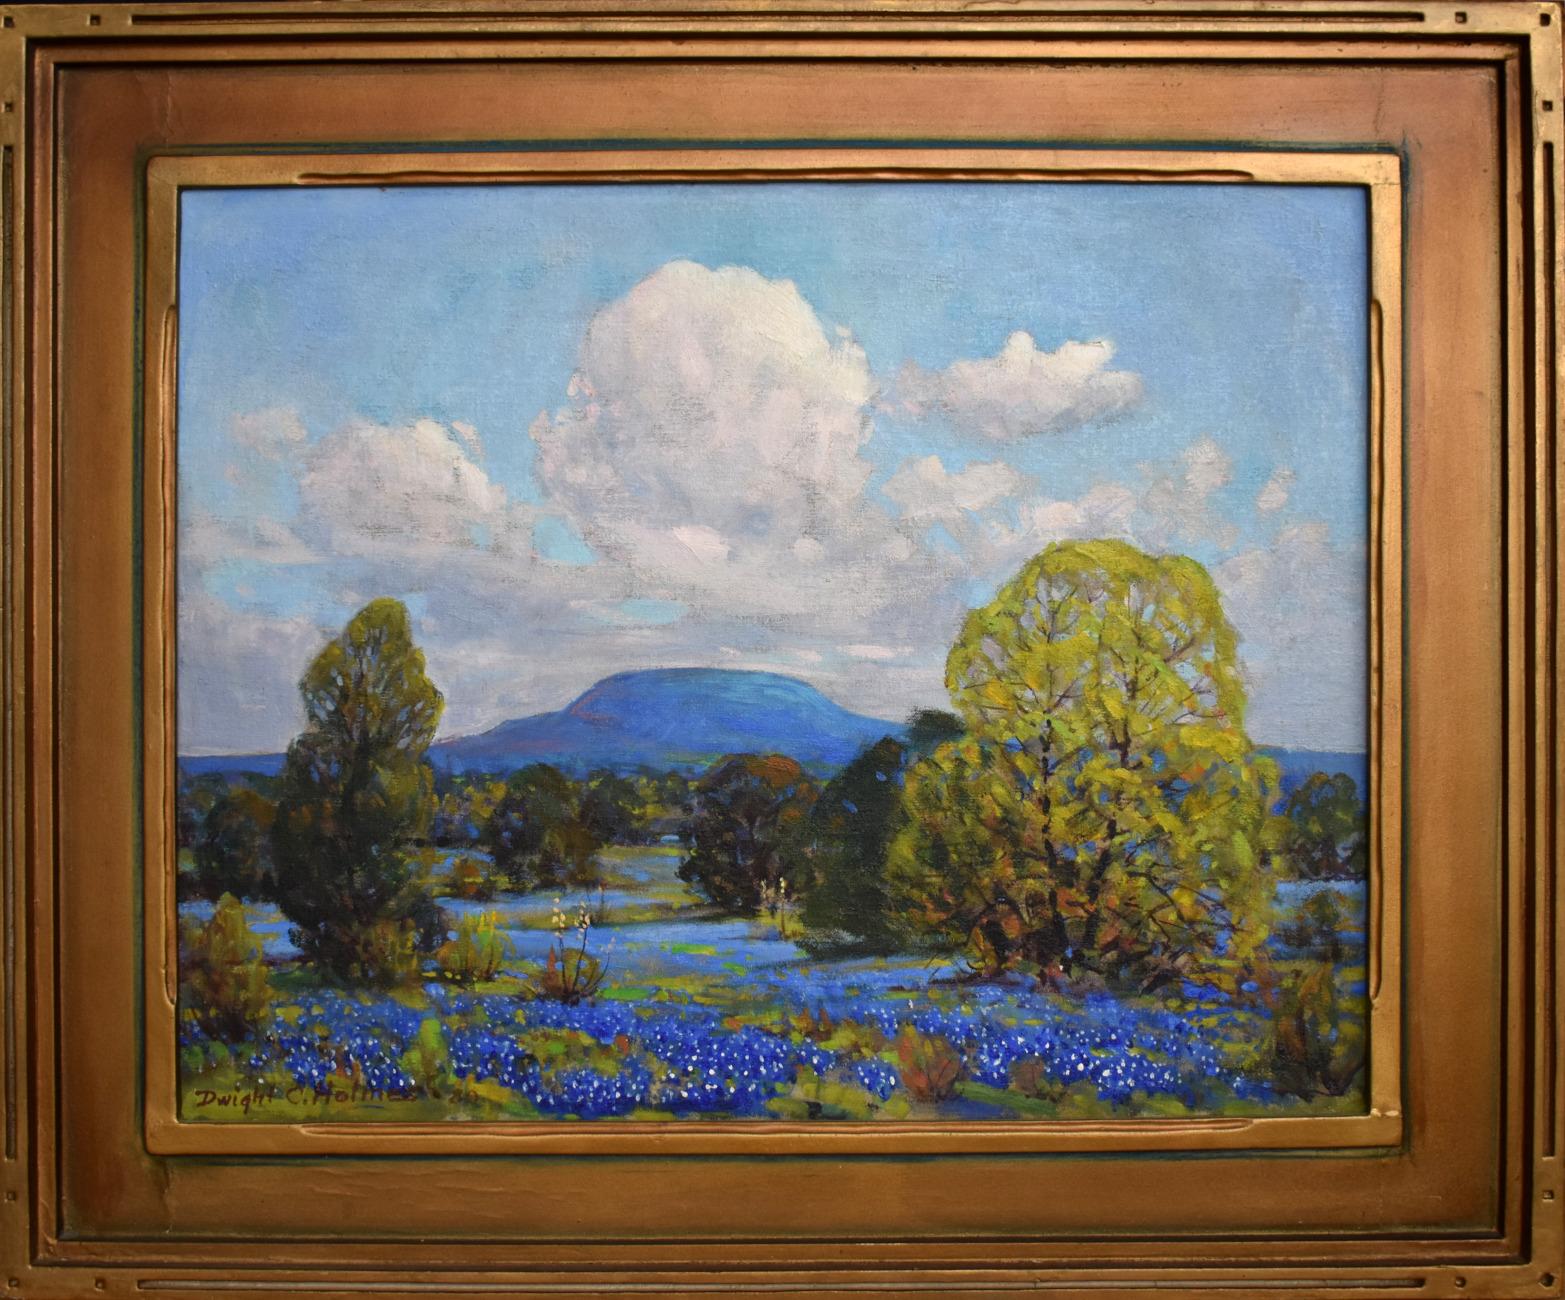 Dwight Holmes Landscape Painting - "BLUEBONNET" #10 OF COMFORT TEXAS Volkenburg Mountain